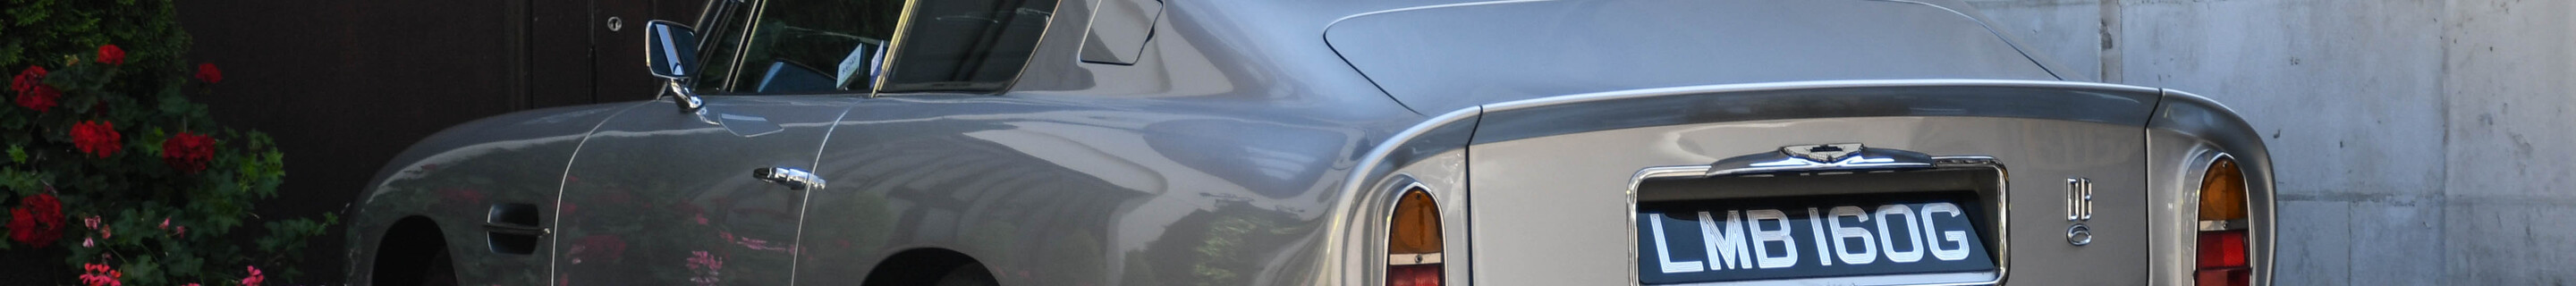 Aston Martin DB6 Superleggera